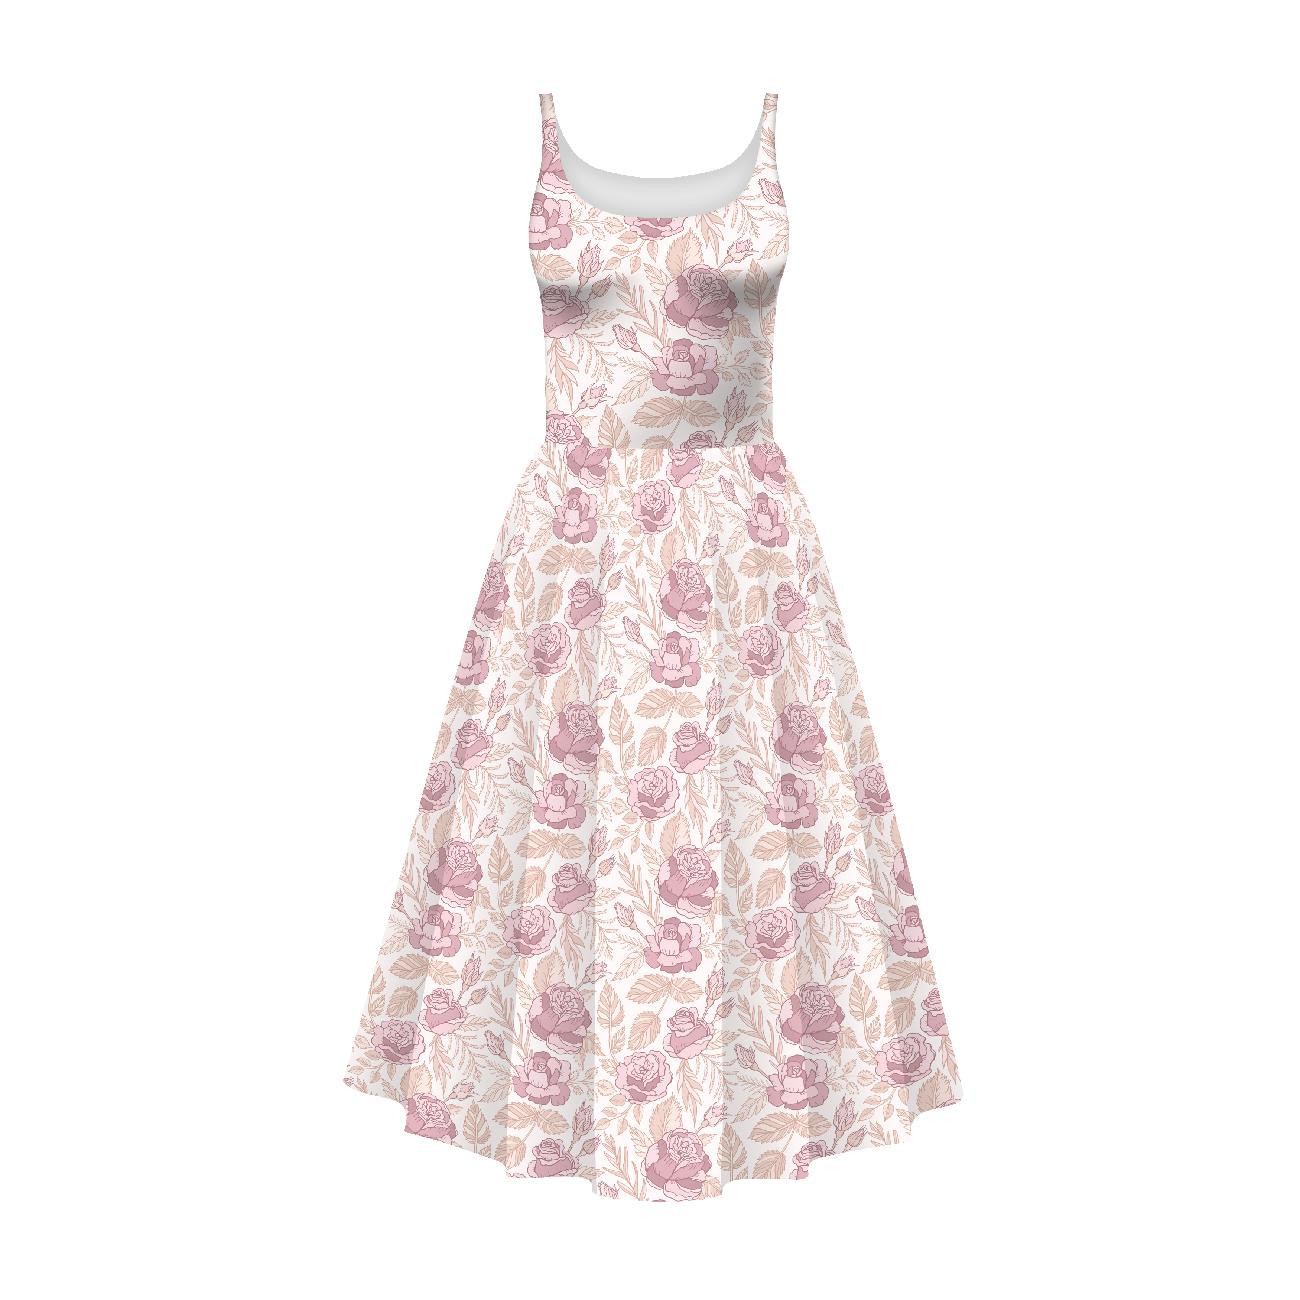 DRESS "ISABELLE" - PINK ROSES PAT. 4 - sewing set